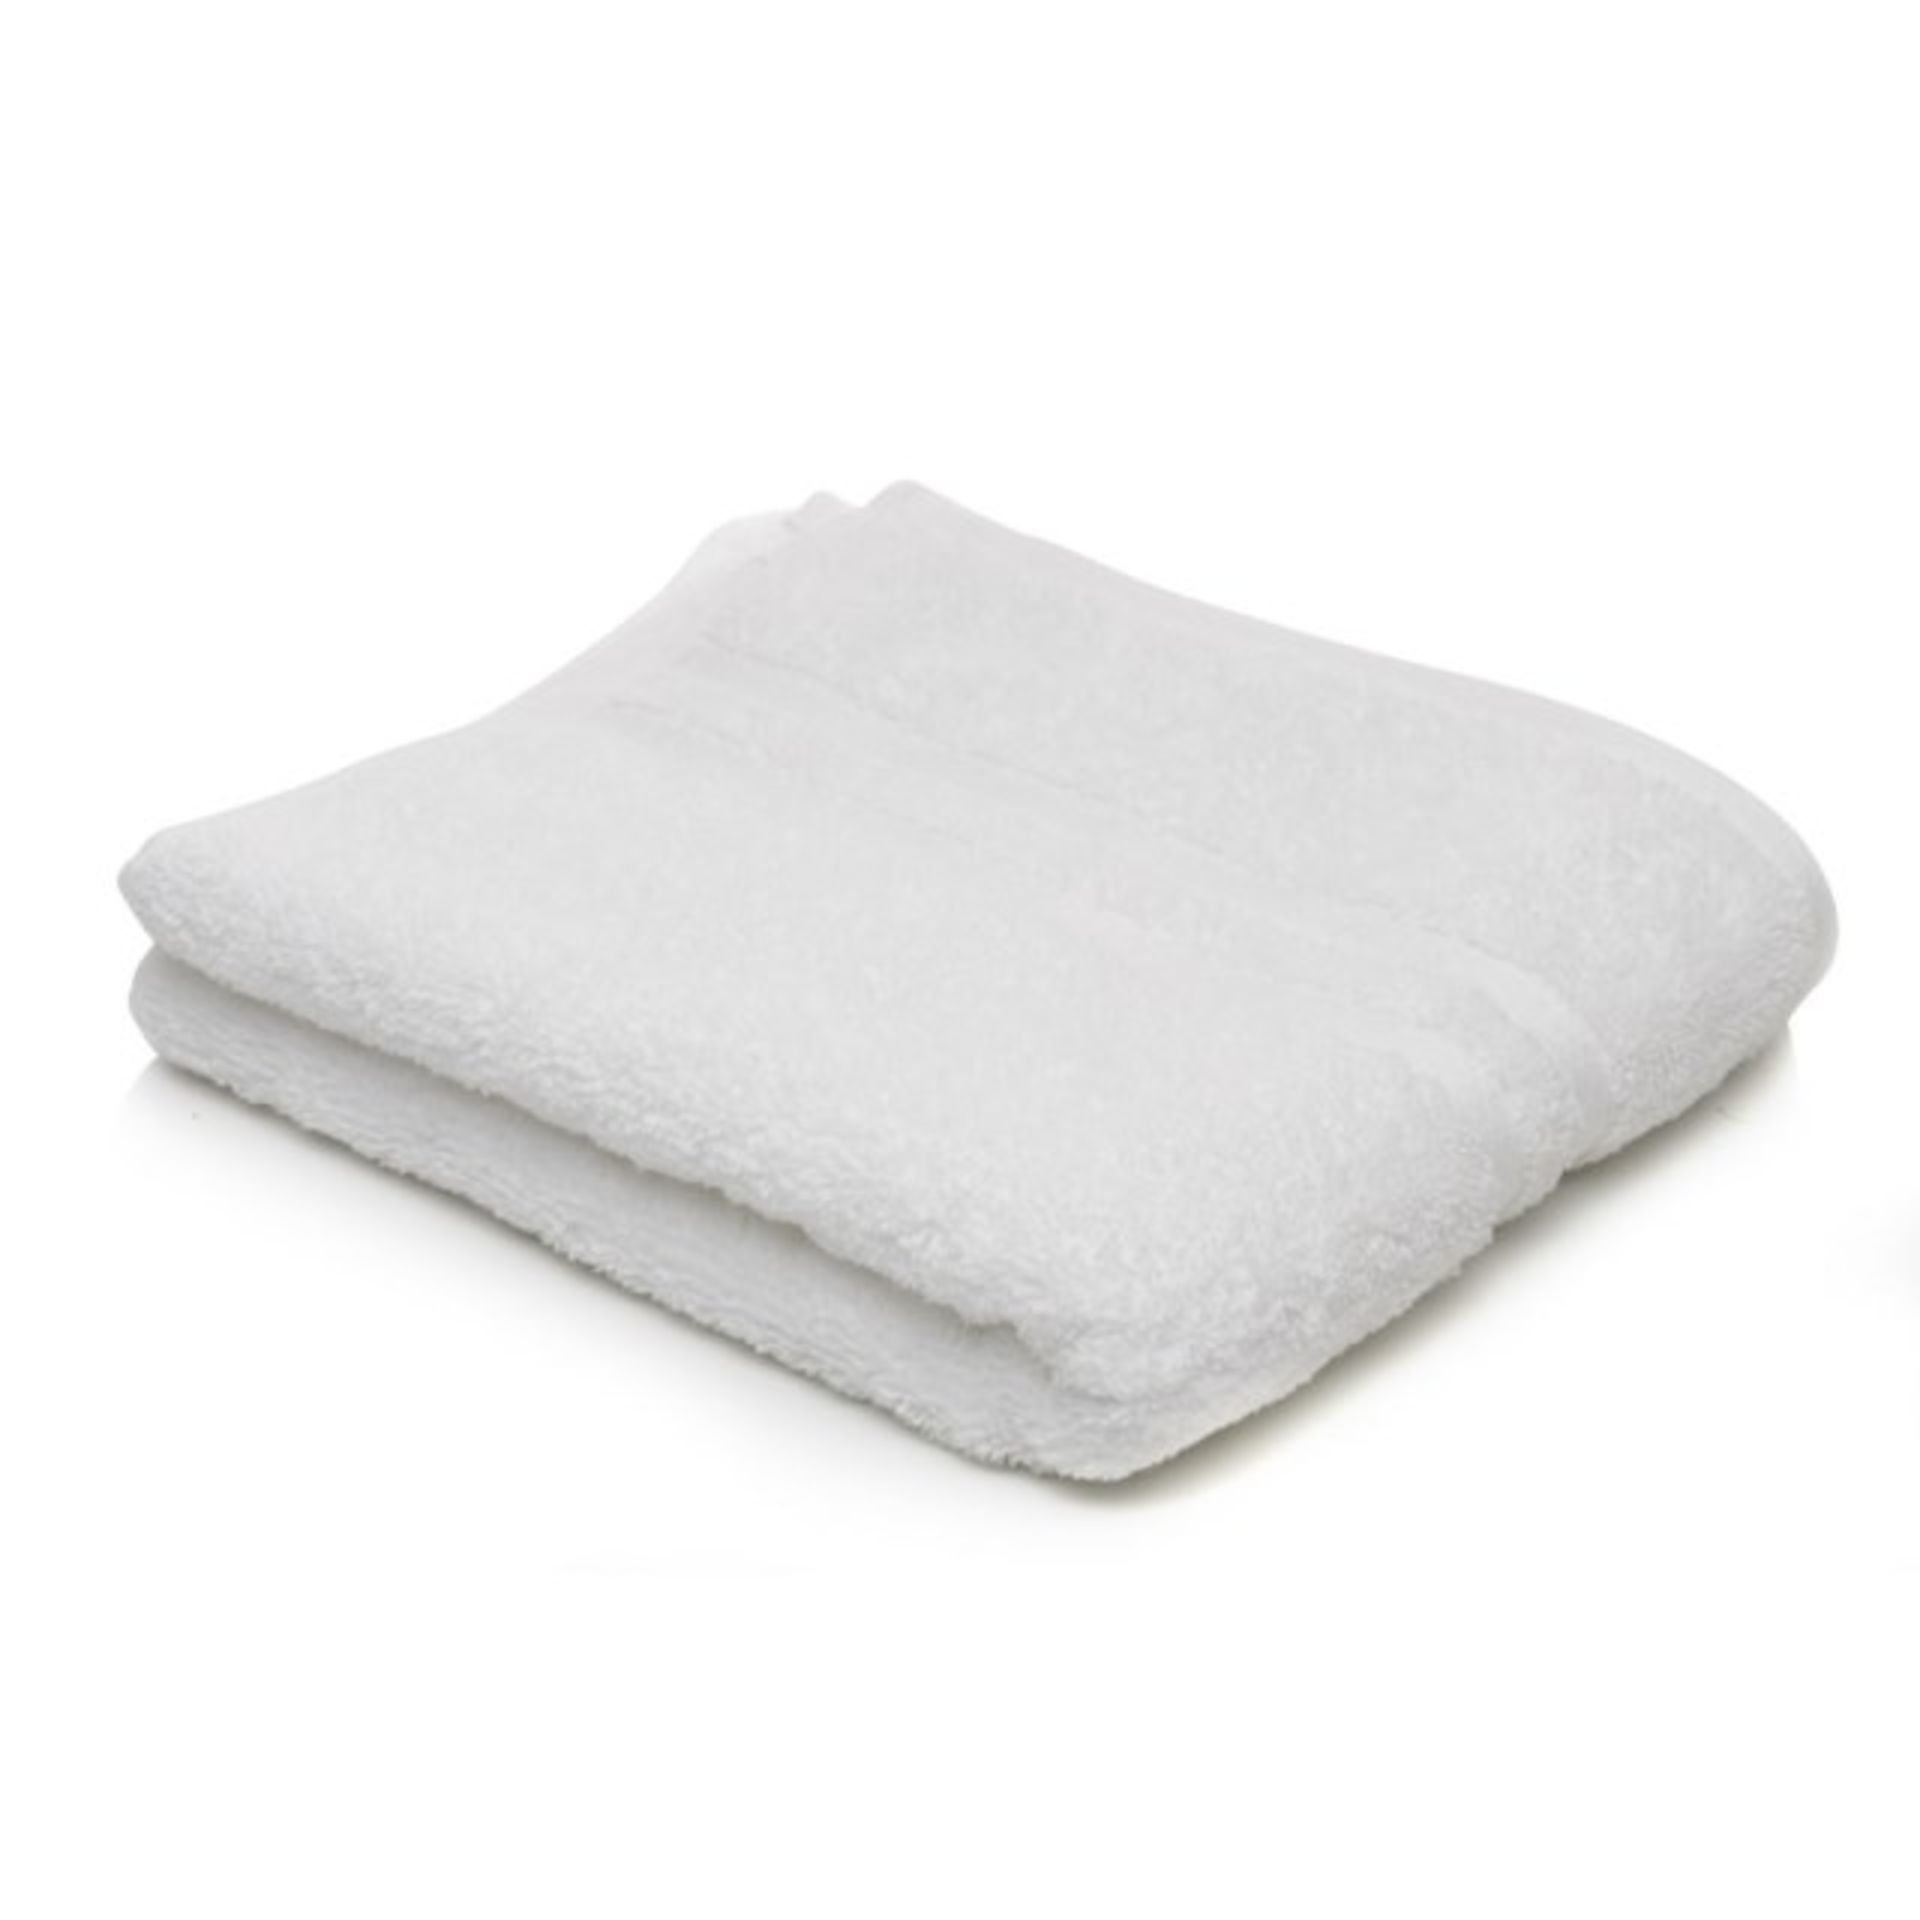 V Brand New Hotel Quality Large Cotton Bath Sheet